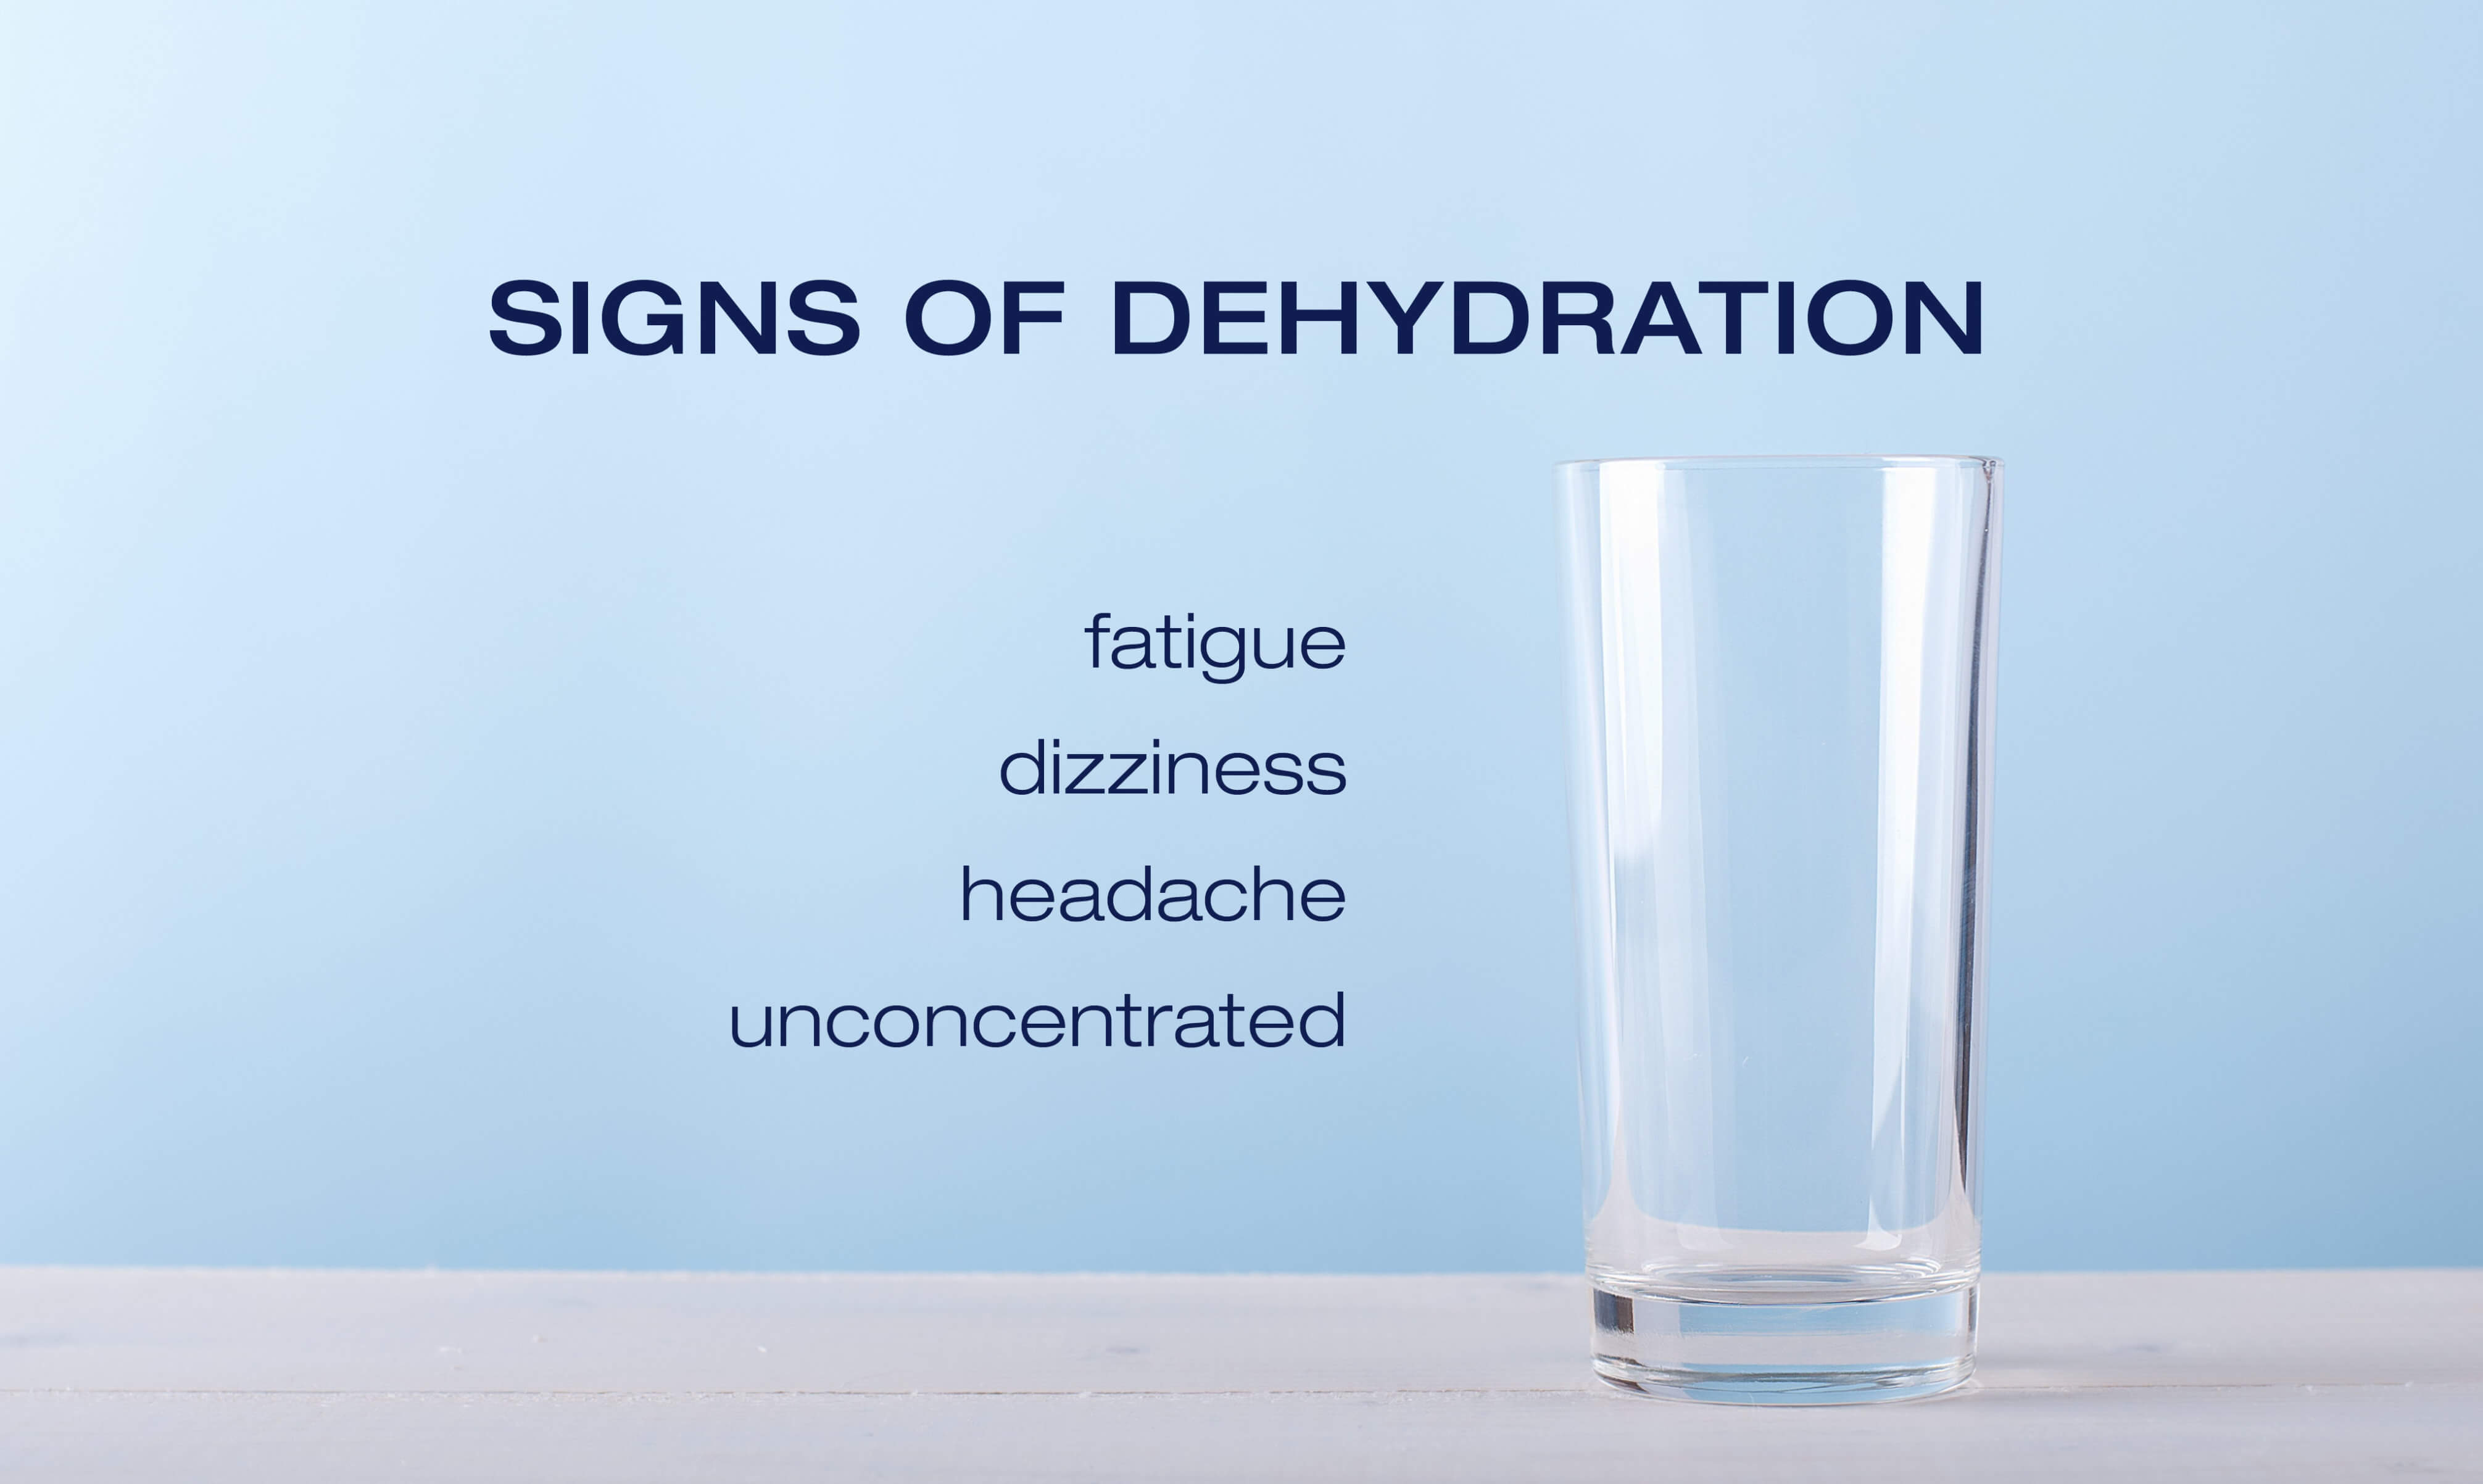 Symptoms of dehydration